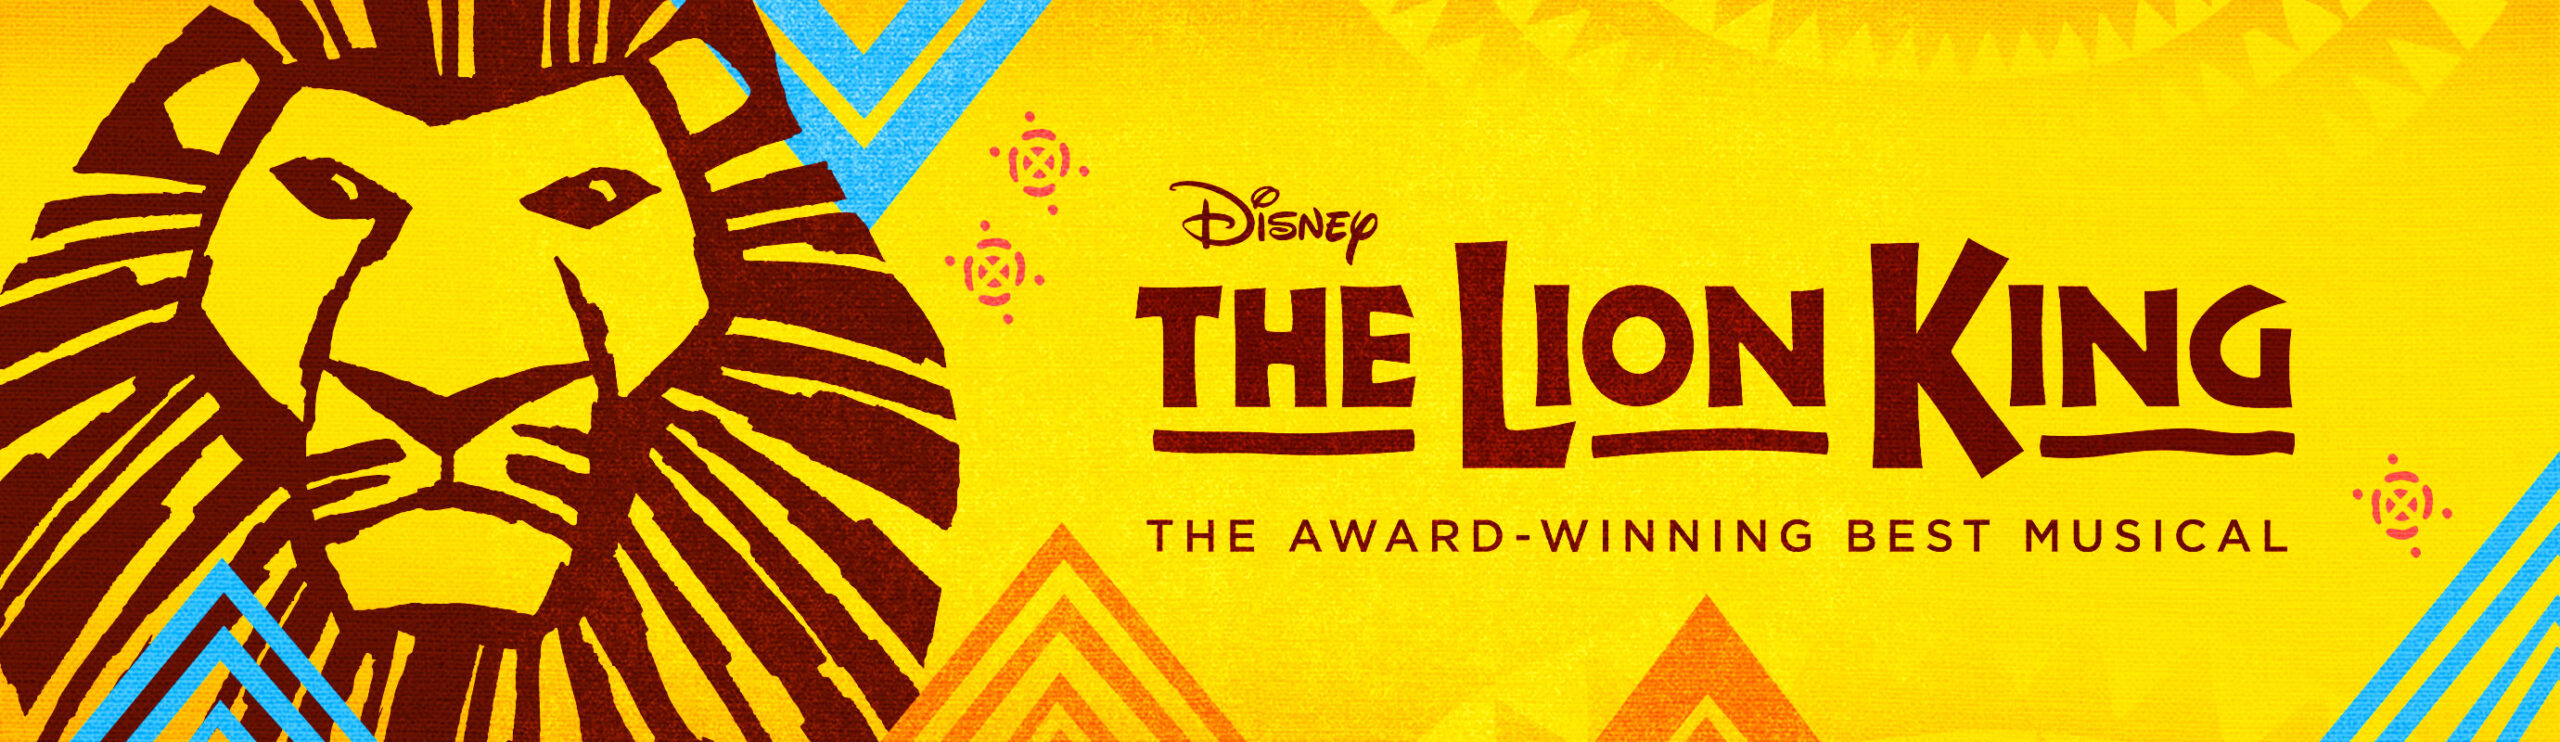 Disney THE LION KING - The Award-Winning Best Musical